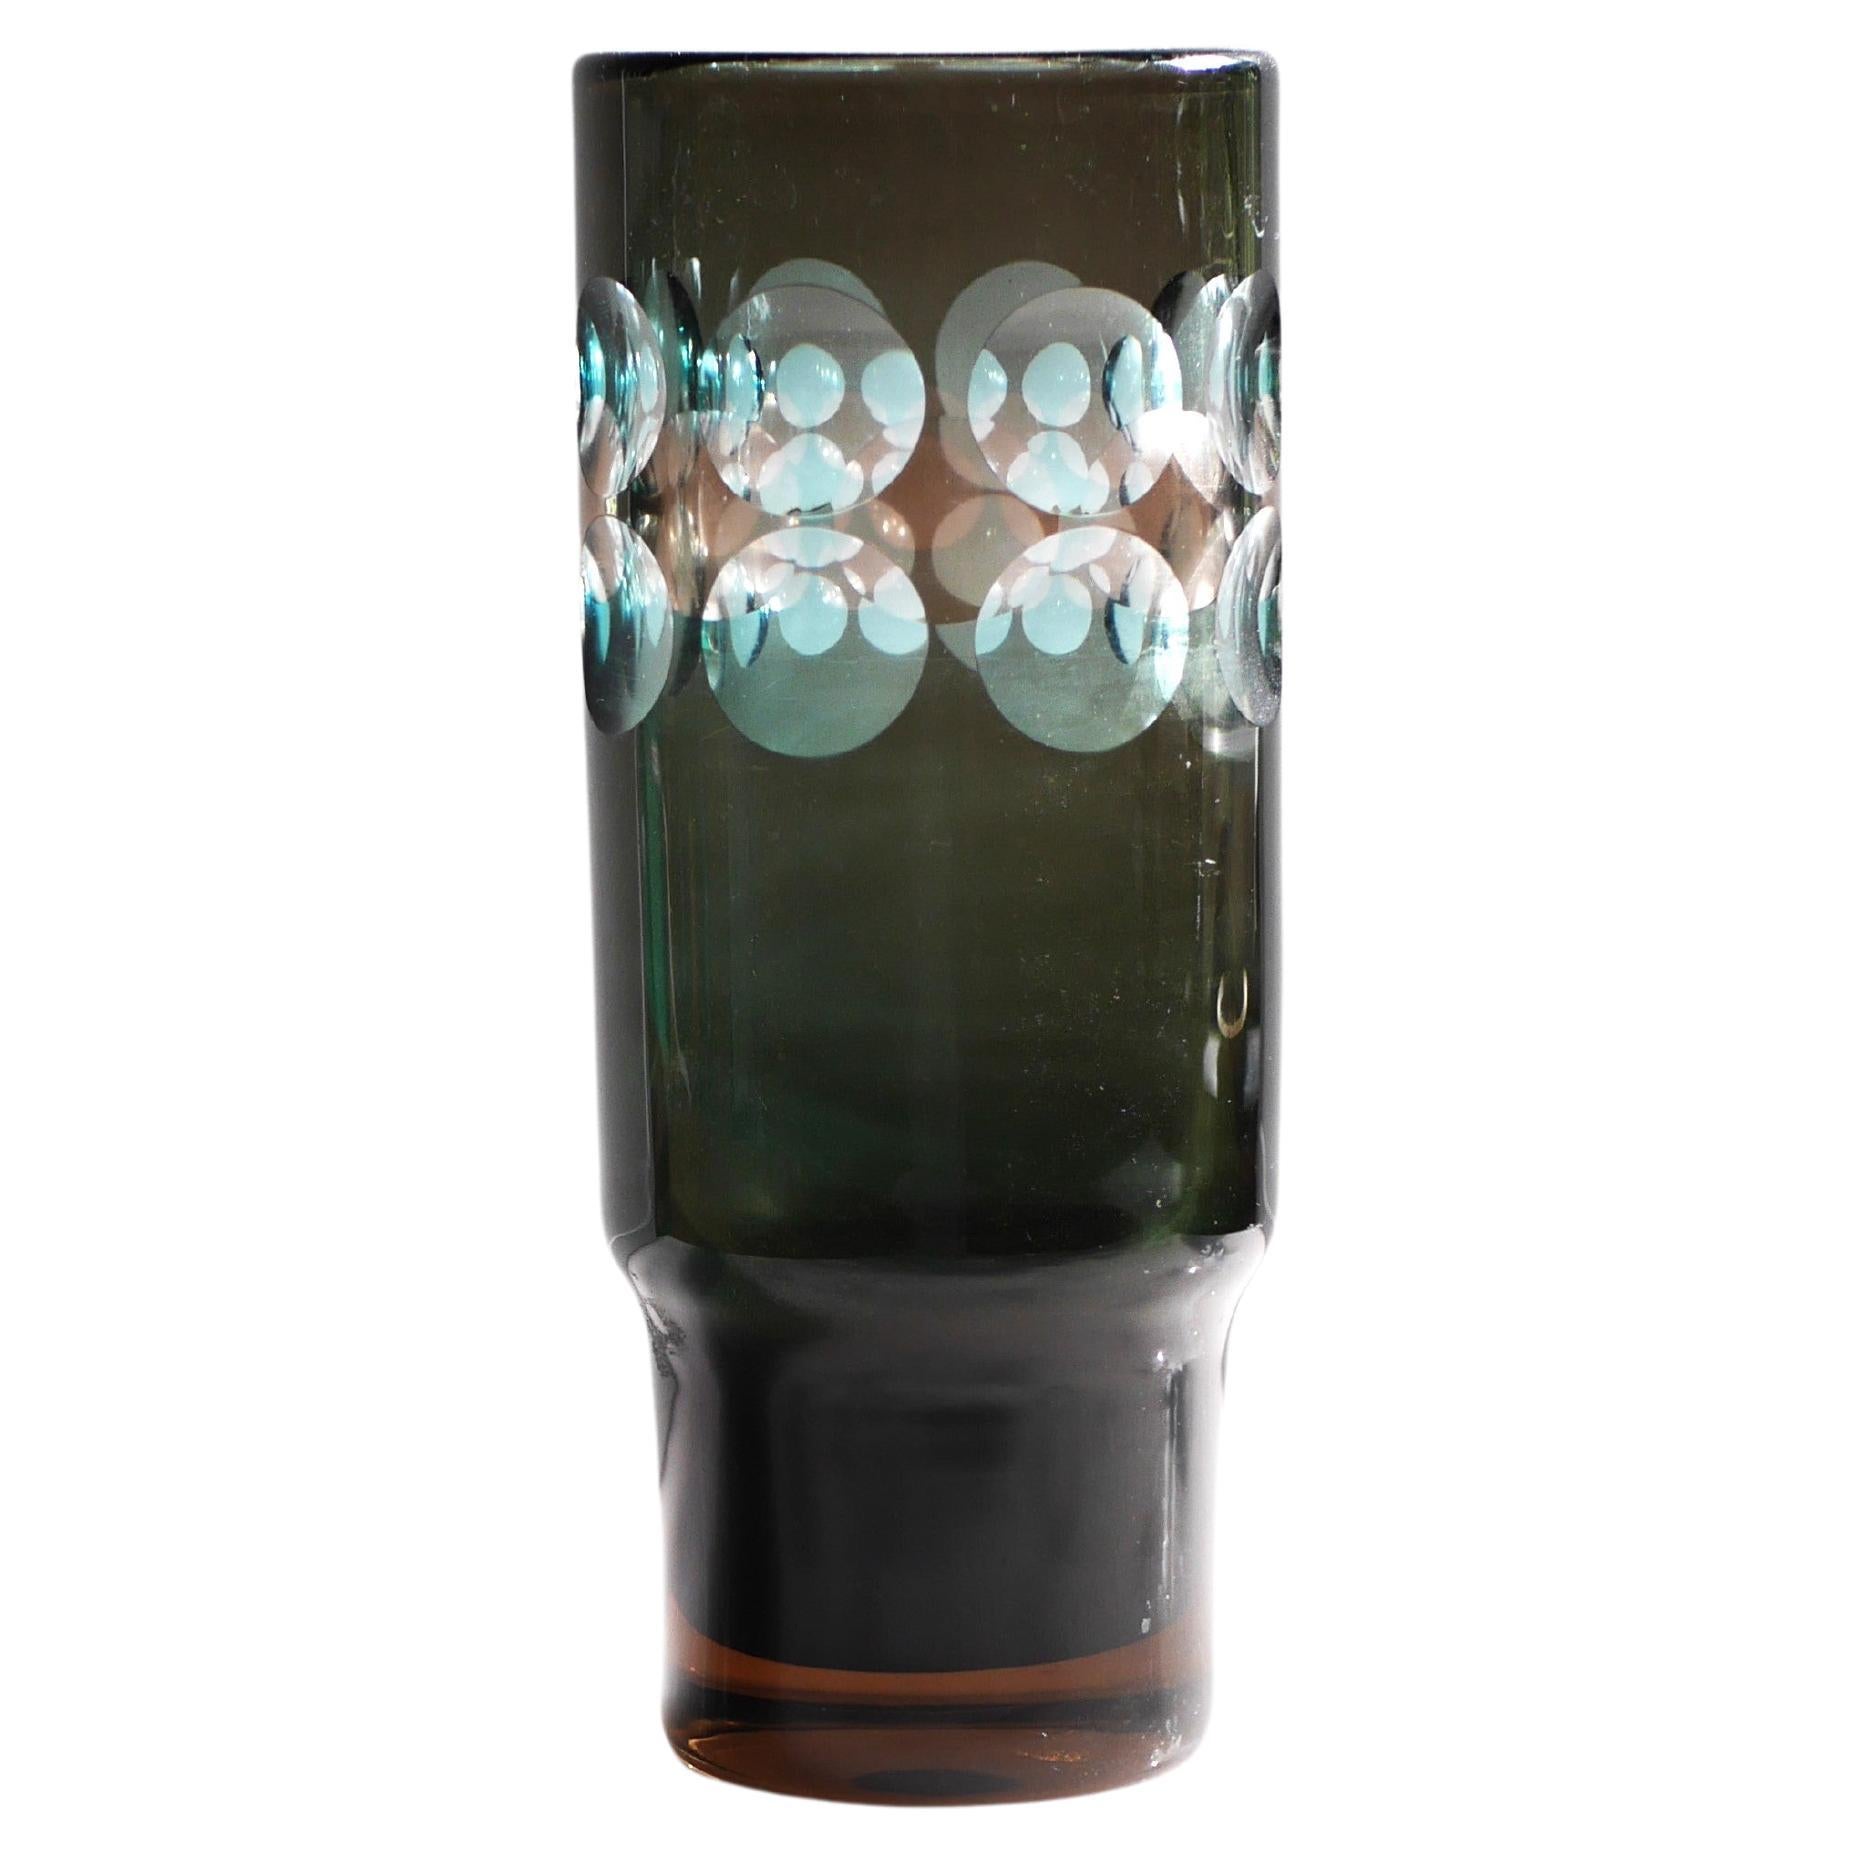 Crystal glass vase made and signed by Ove Sandberg for Kosta Boda, Sweden